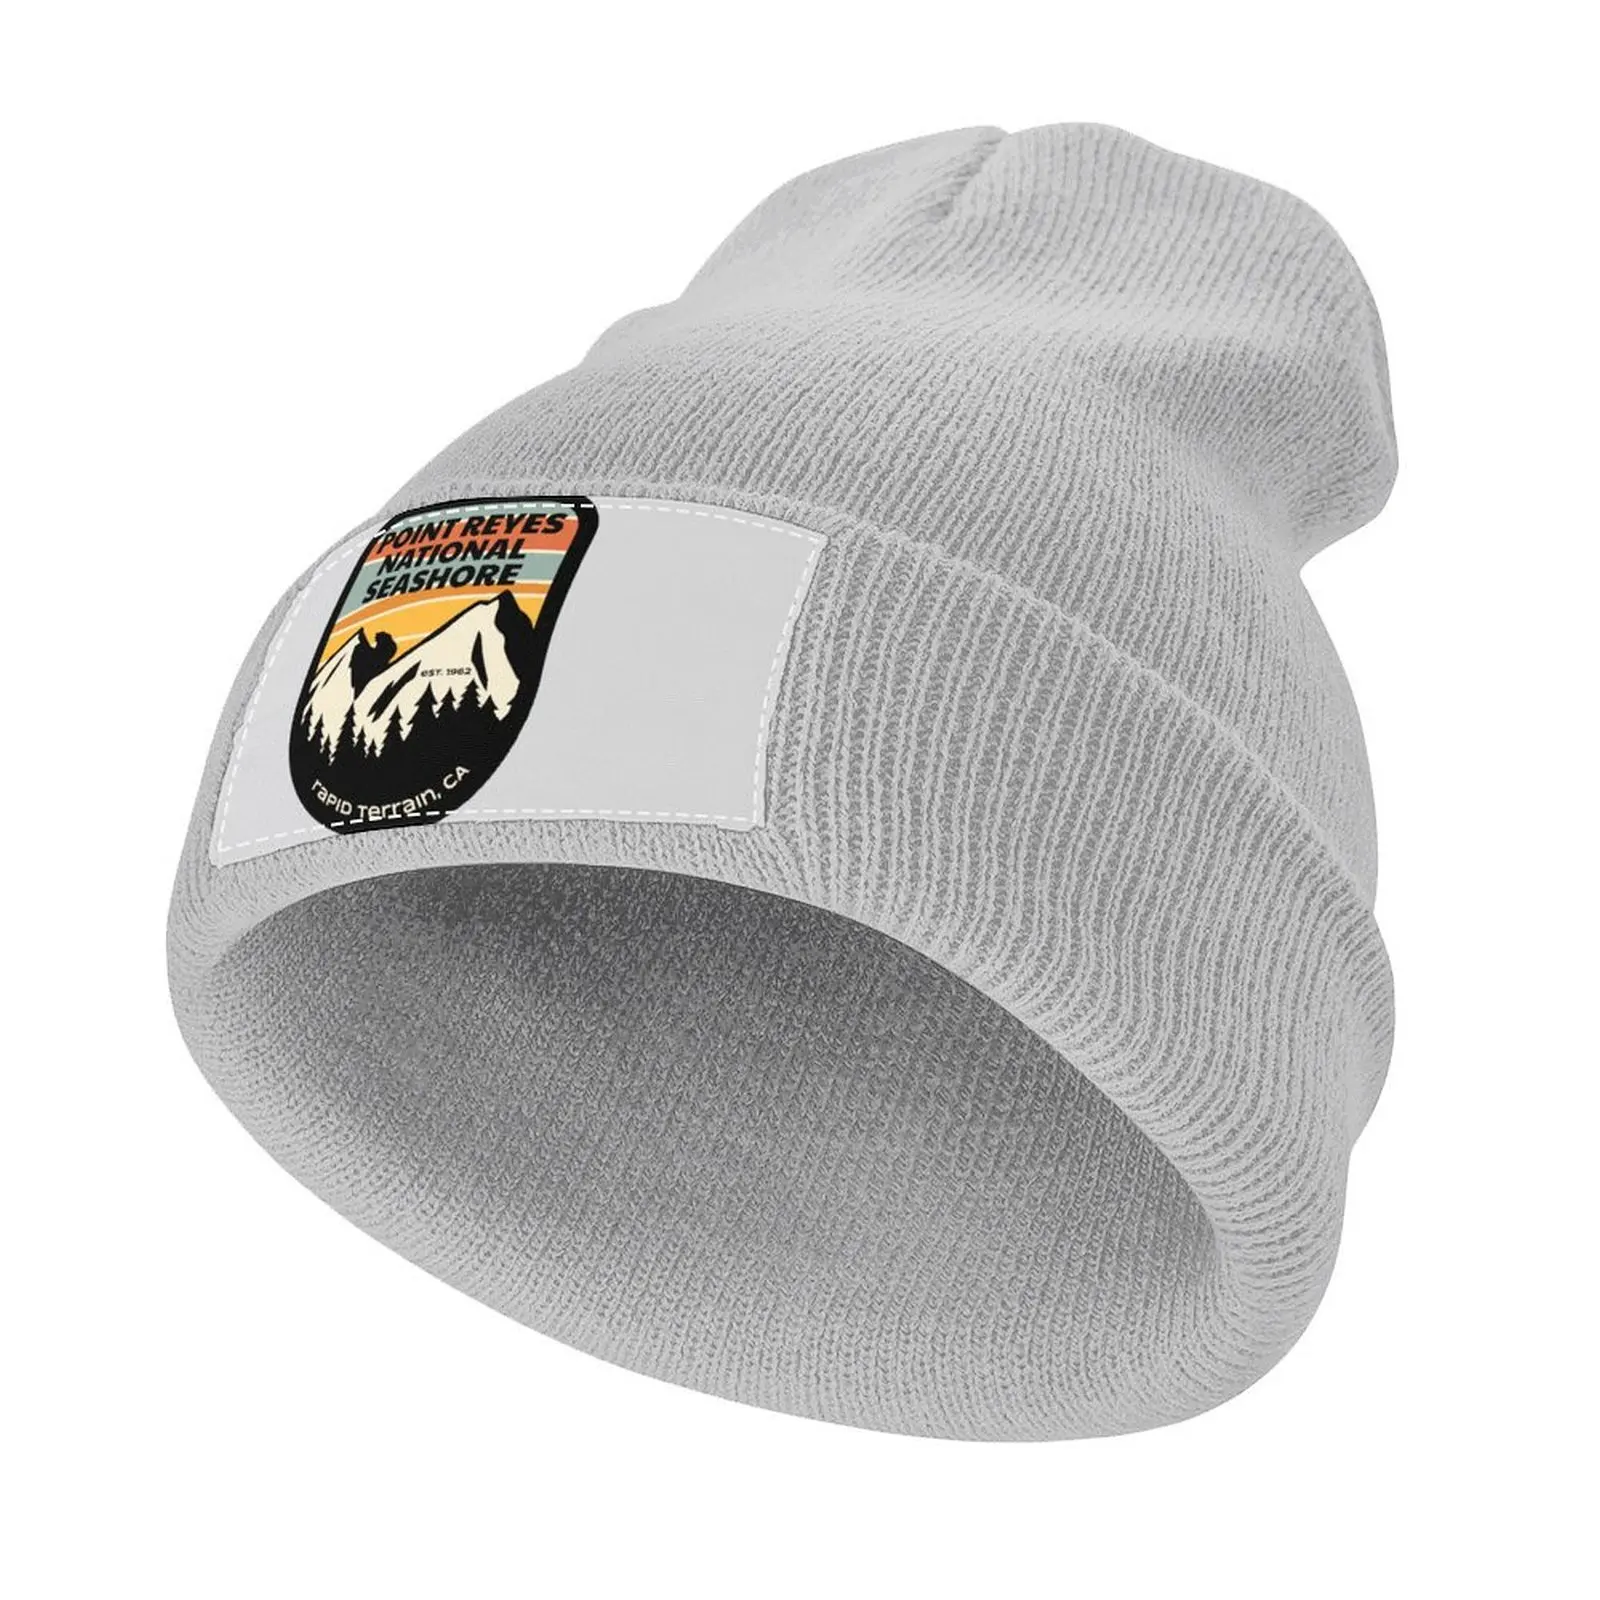 

Point Reyes National Seashore Knitted Cap Golf Hat Man hard hat Luxury Hat Hats Baseball Cap Caps Women Men's